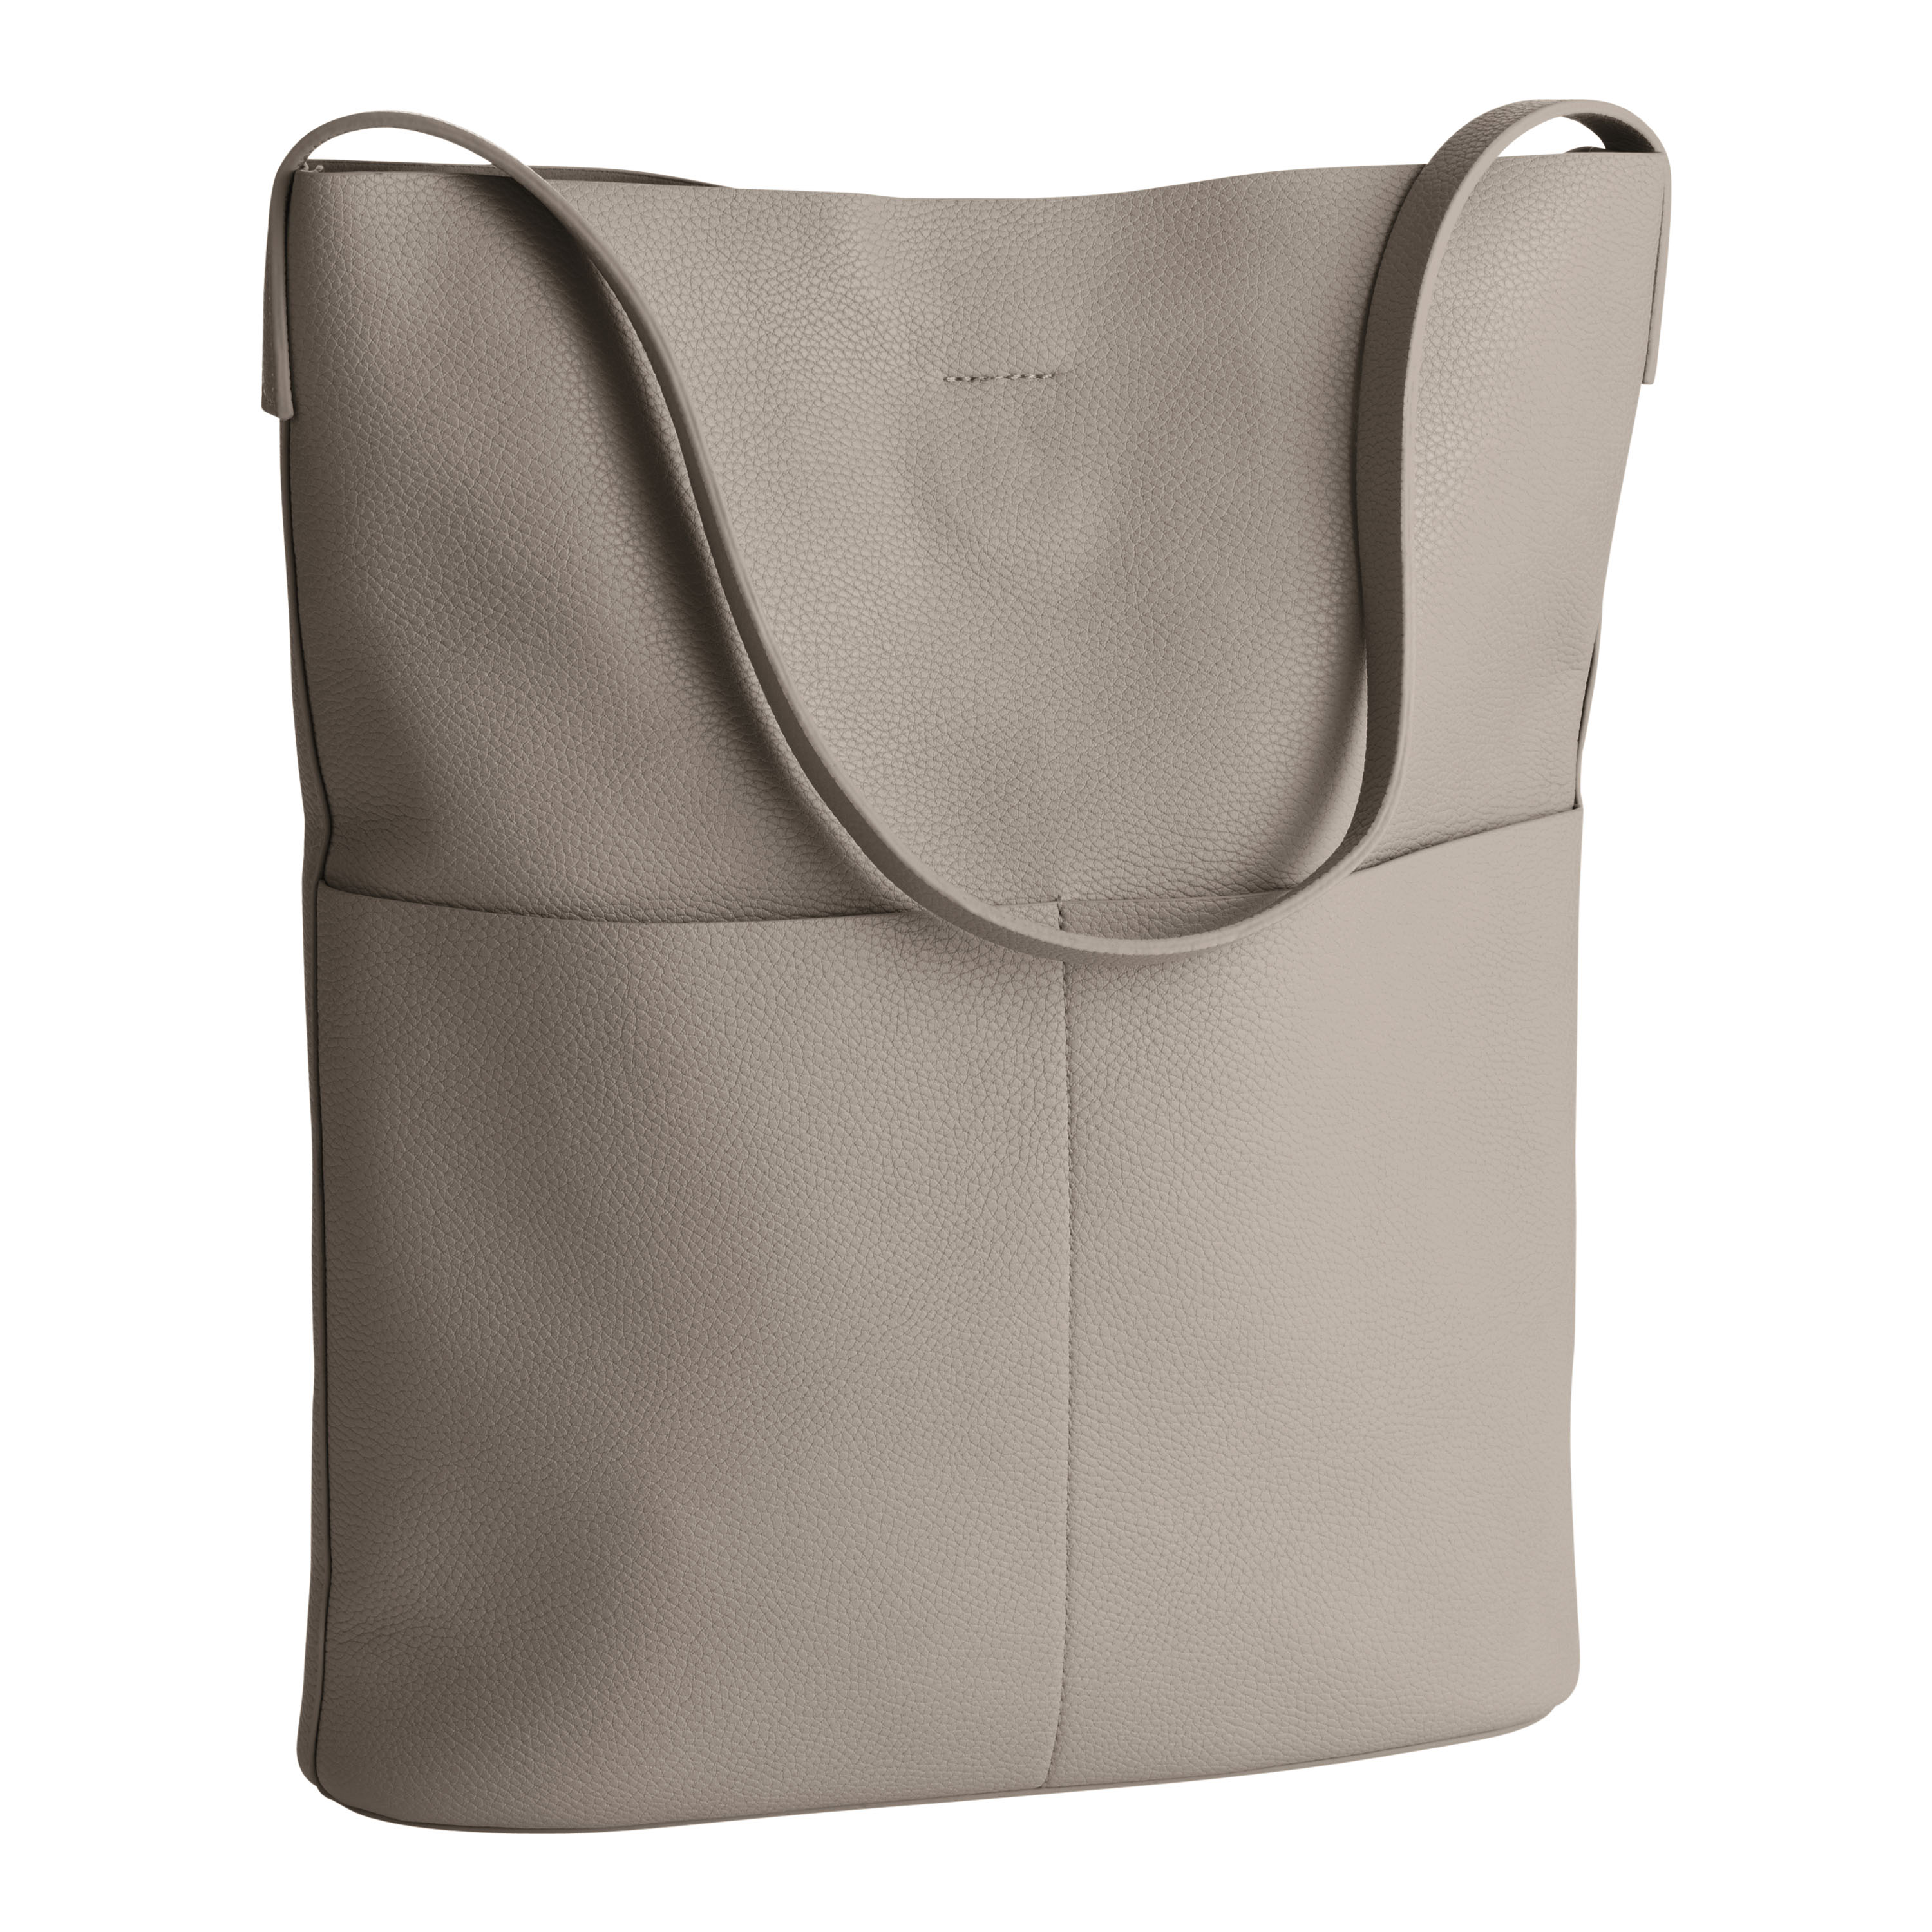 Women's Swirl Print Leather Tote Bag